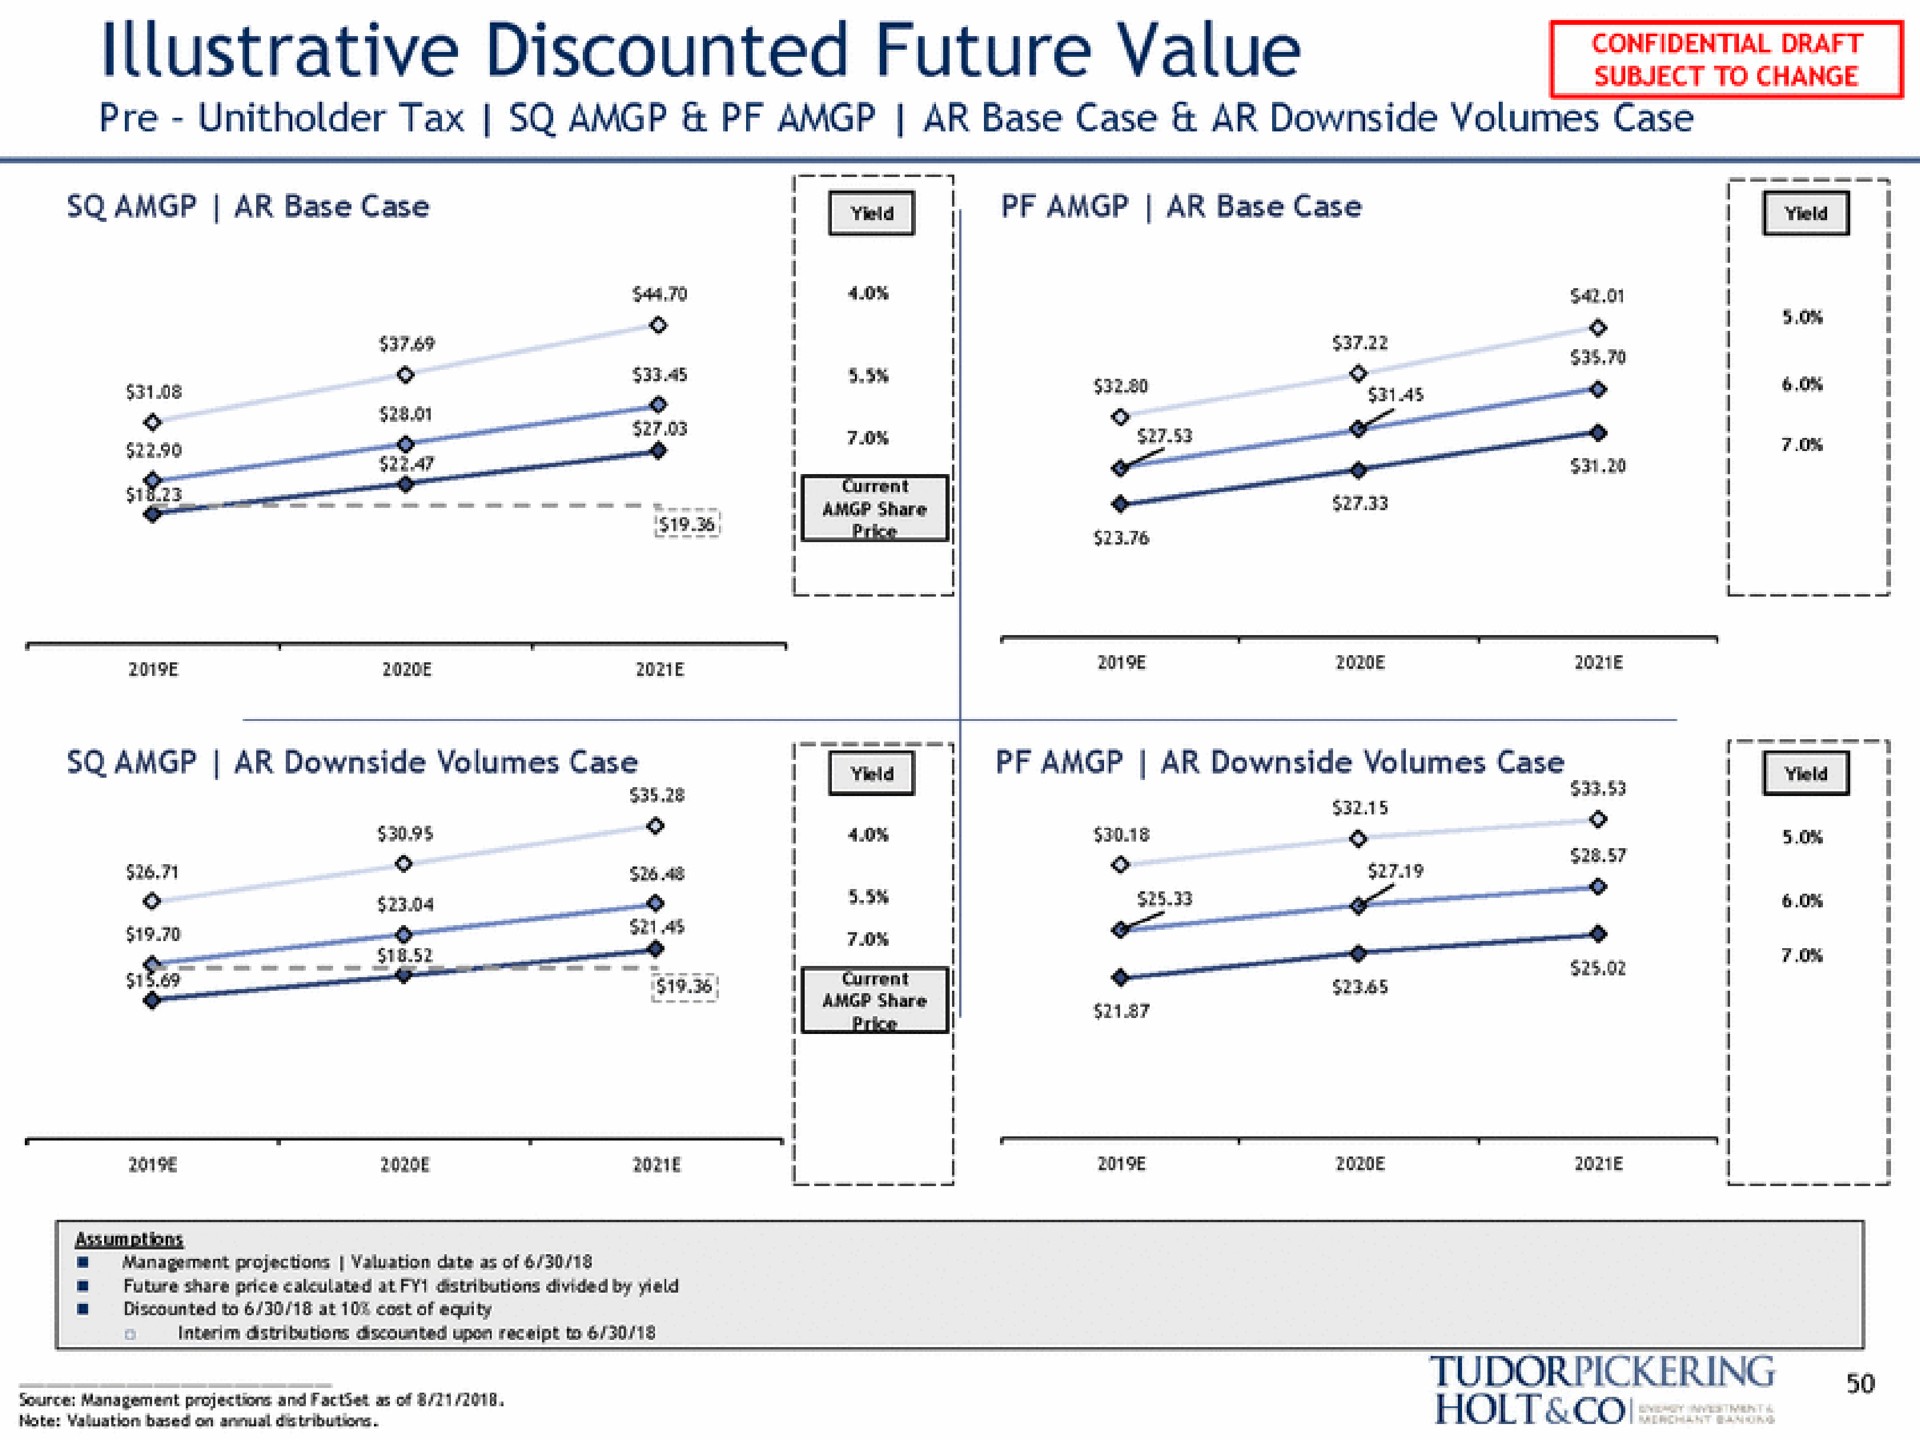 illustrative discounted future value am a | Tudor, Pickering, Holt & Co